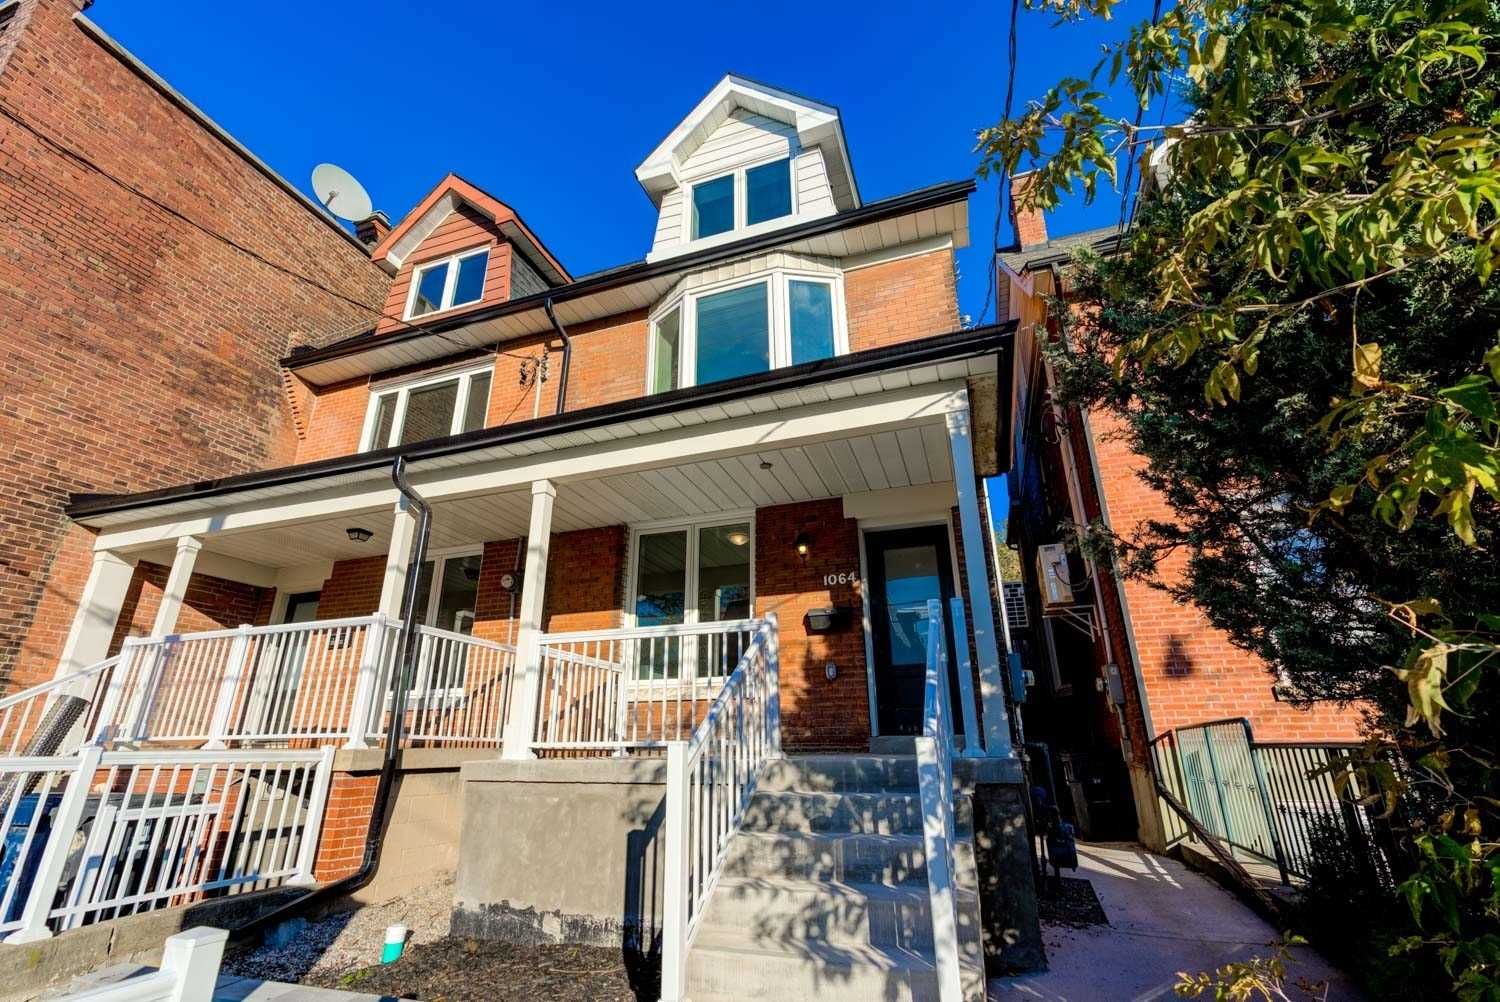 Main Photo: 2nd Fl 1064 College Street in Toronto: Dufferin Grove House (2 1/2 Storey) for lease (Toronto C01)  : MLS®# C5427408